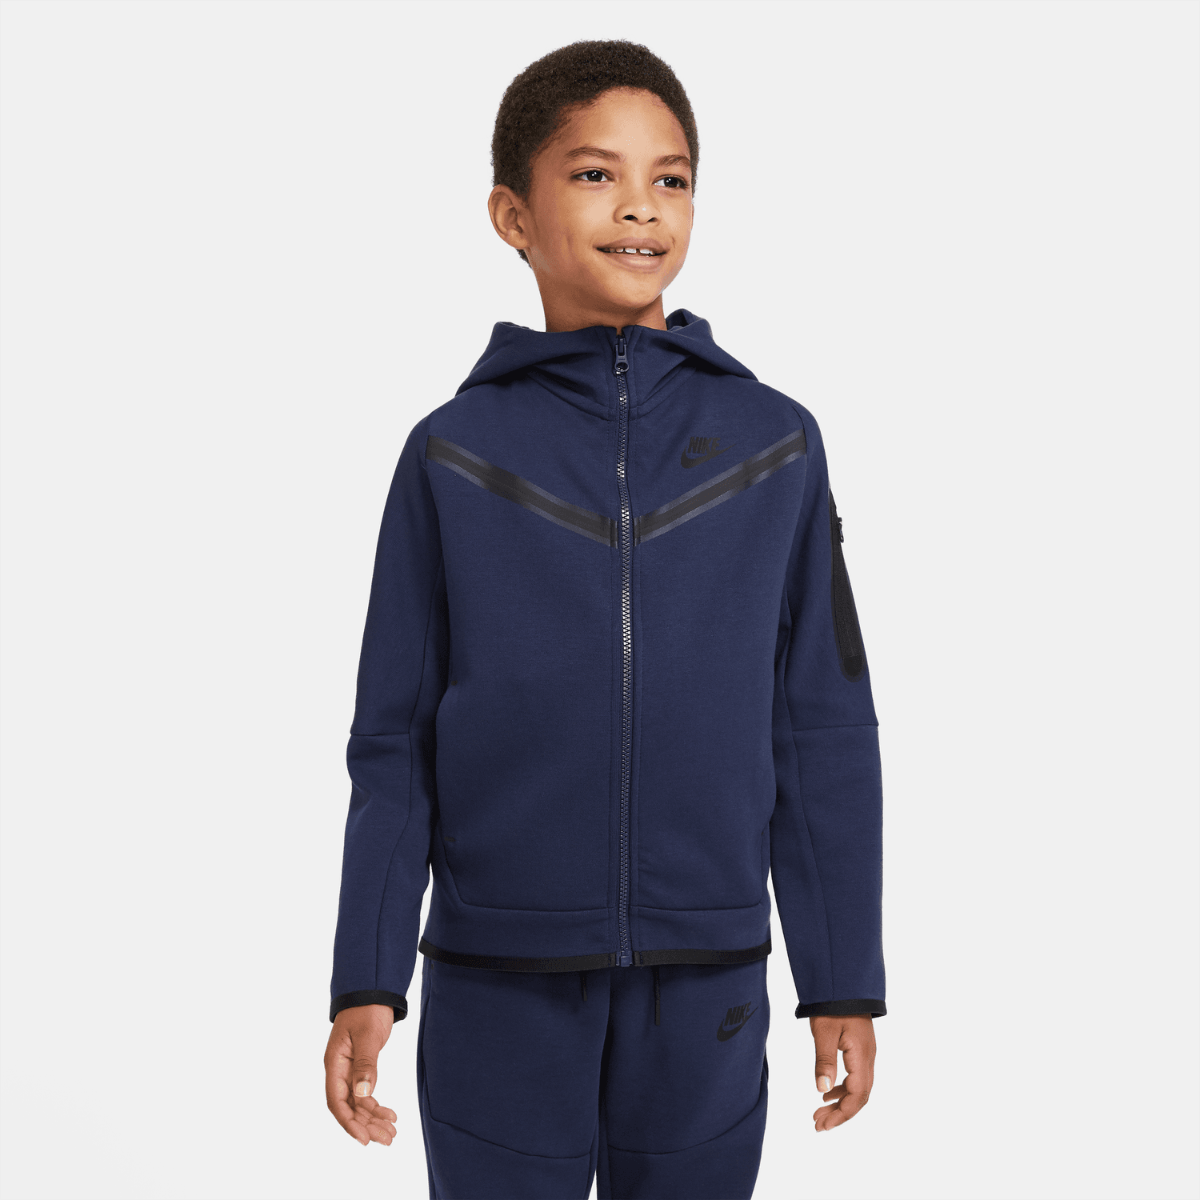 Veste Nike garçon - Nike - 8 ans